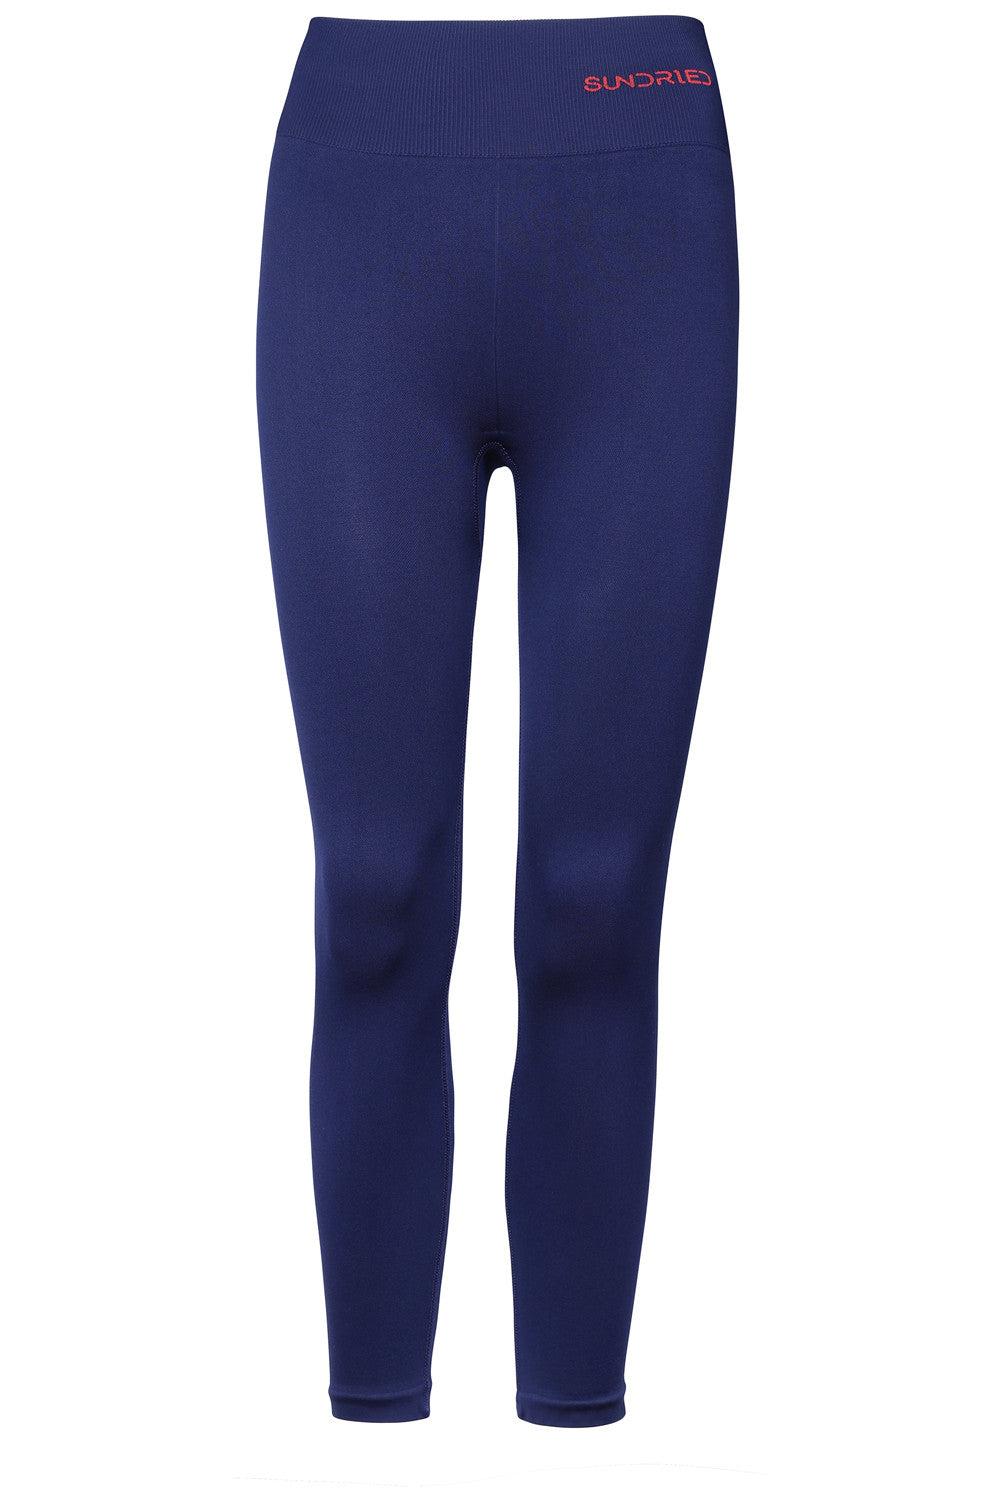 Sundried Ruinette Women's Capris Leggings XL Blue SD0044 XL Blue Activewear